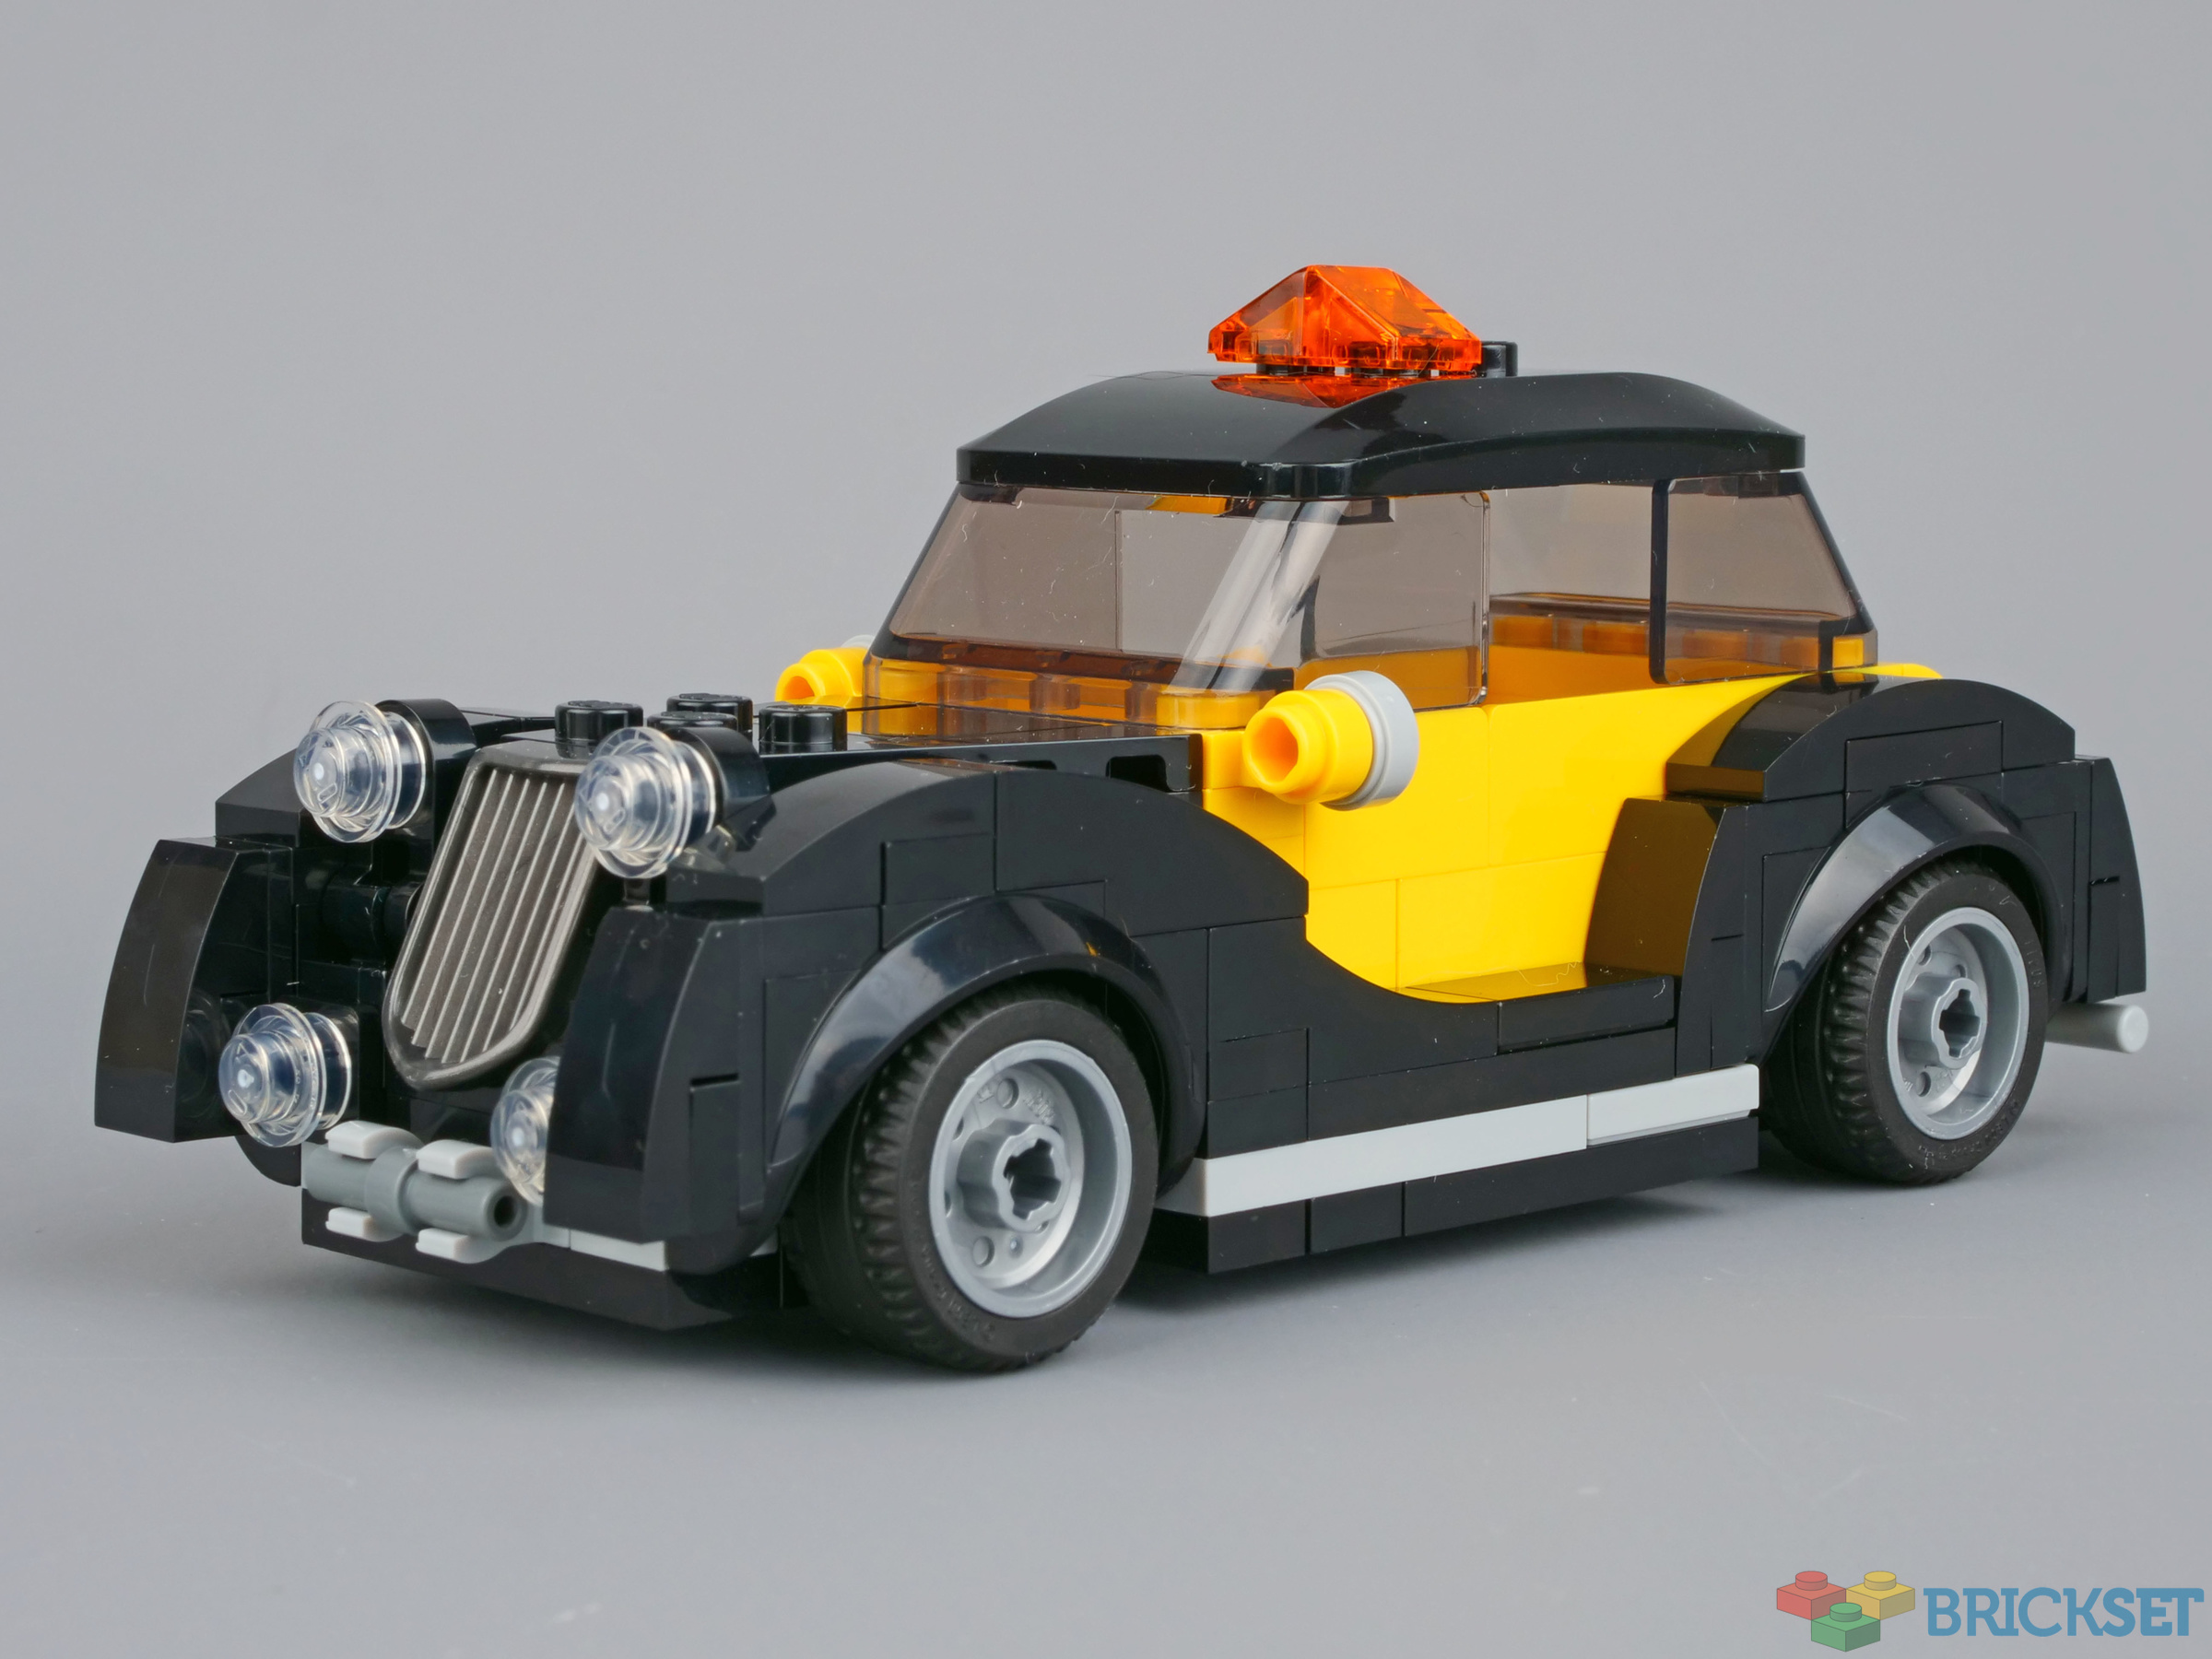 Lego mini figure 2 Yellow car truck vehicle chair seat 